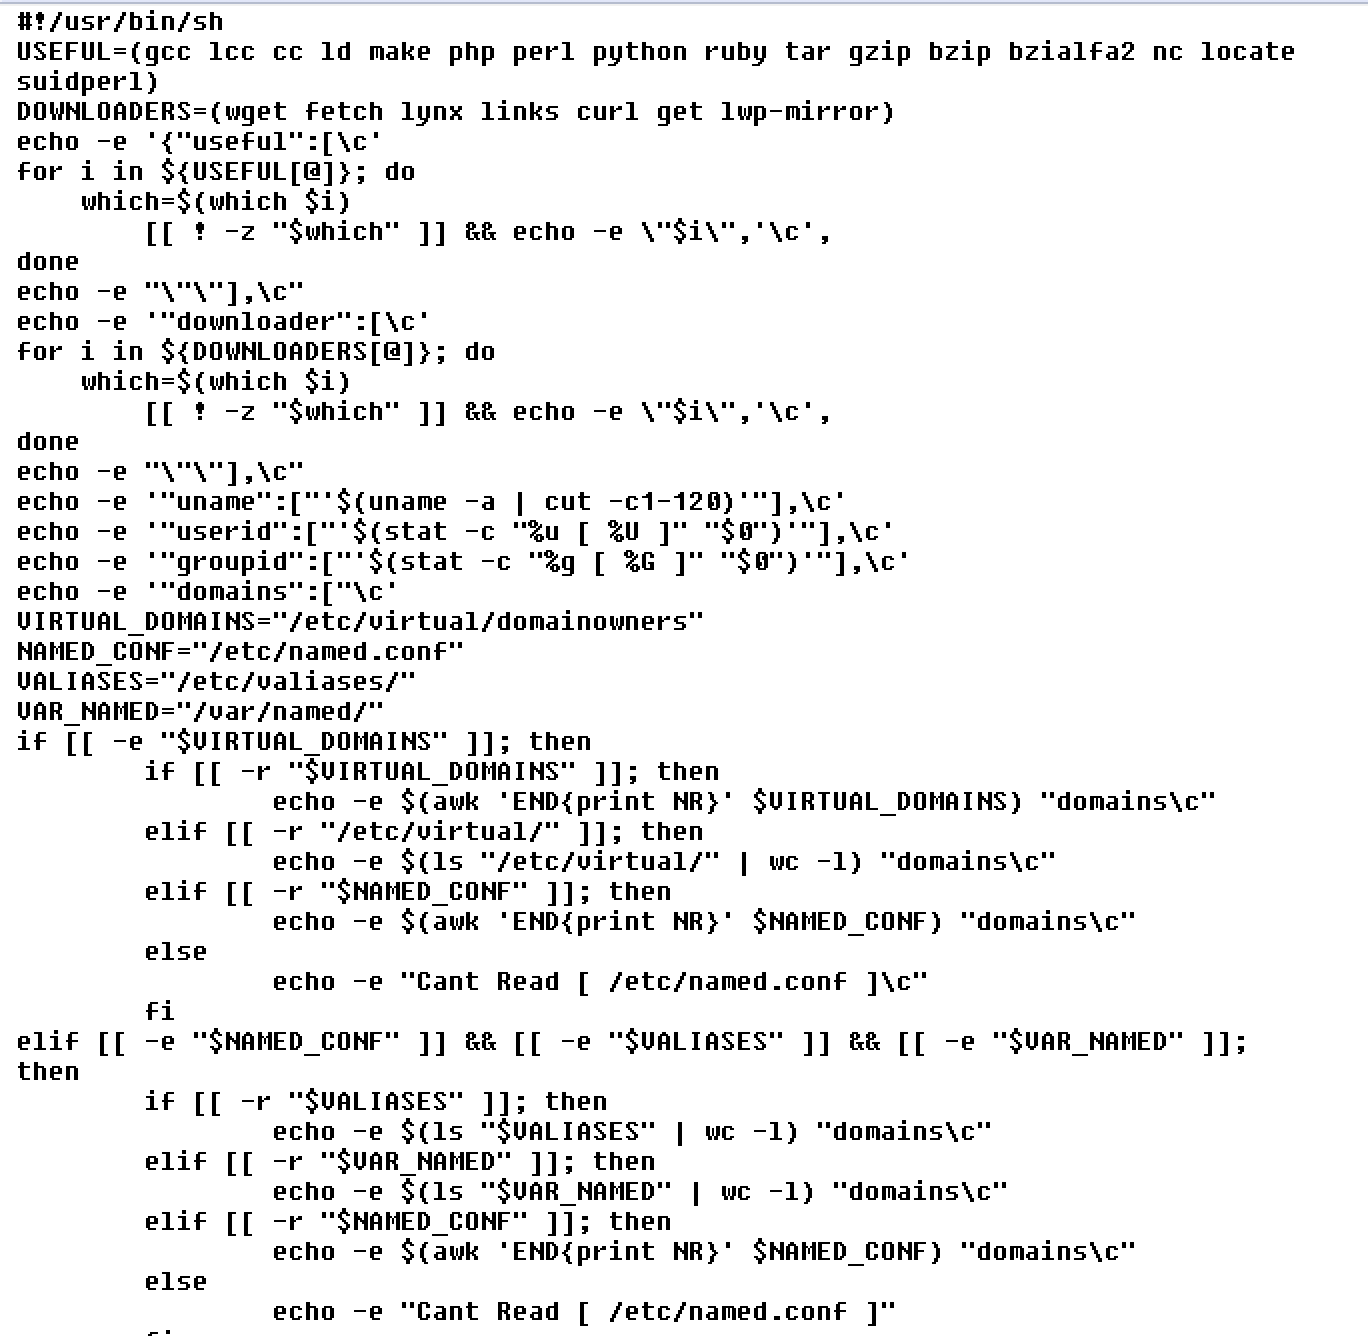 Figure 9. A sample of deployed Bash script